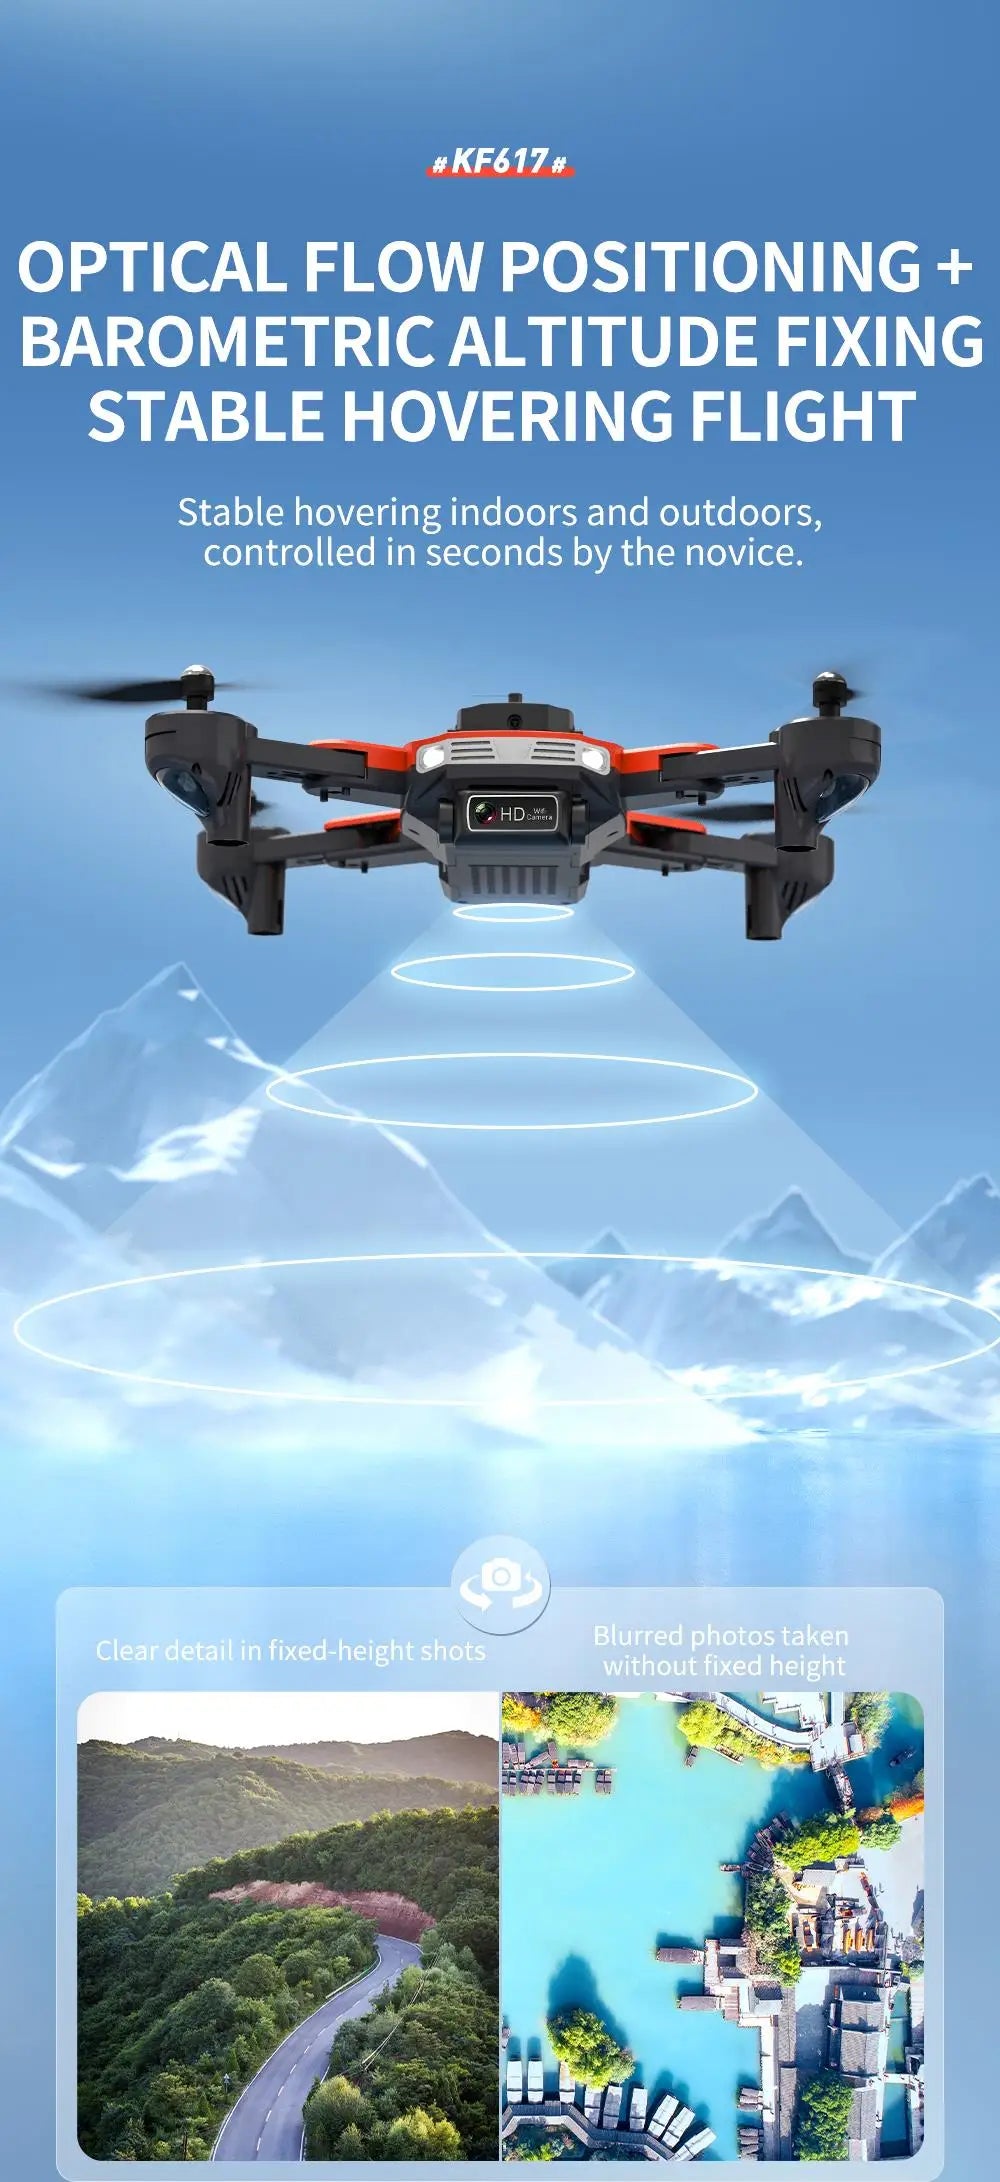 KF617 Pro Mini Drone, #kf617 # optical flow positioning barometric altitude